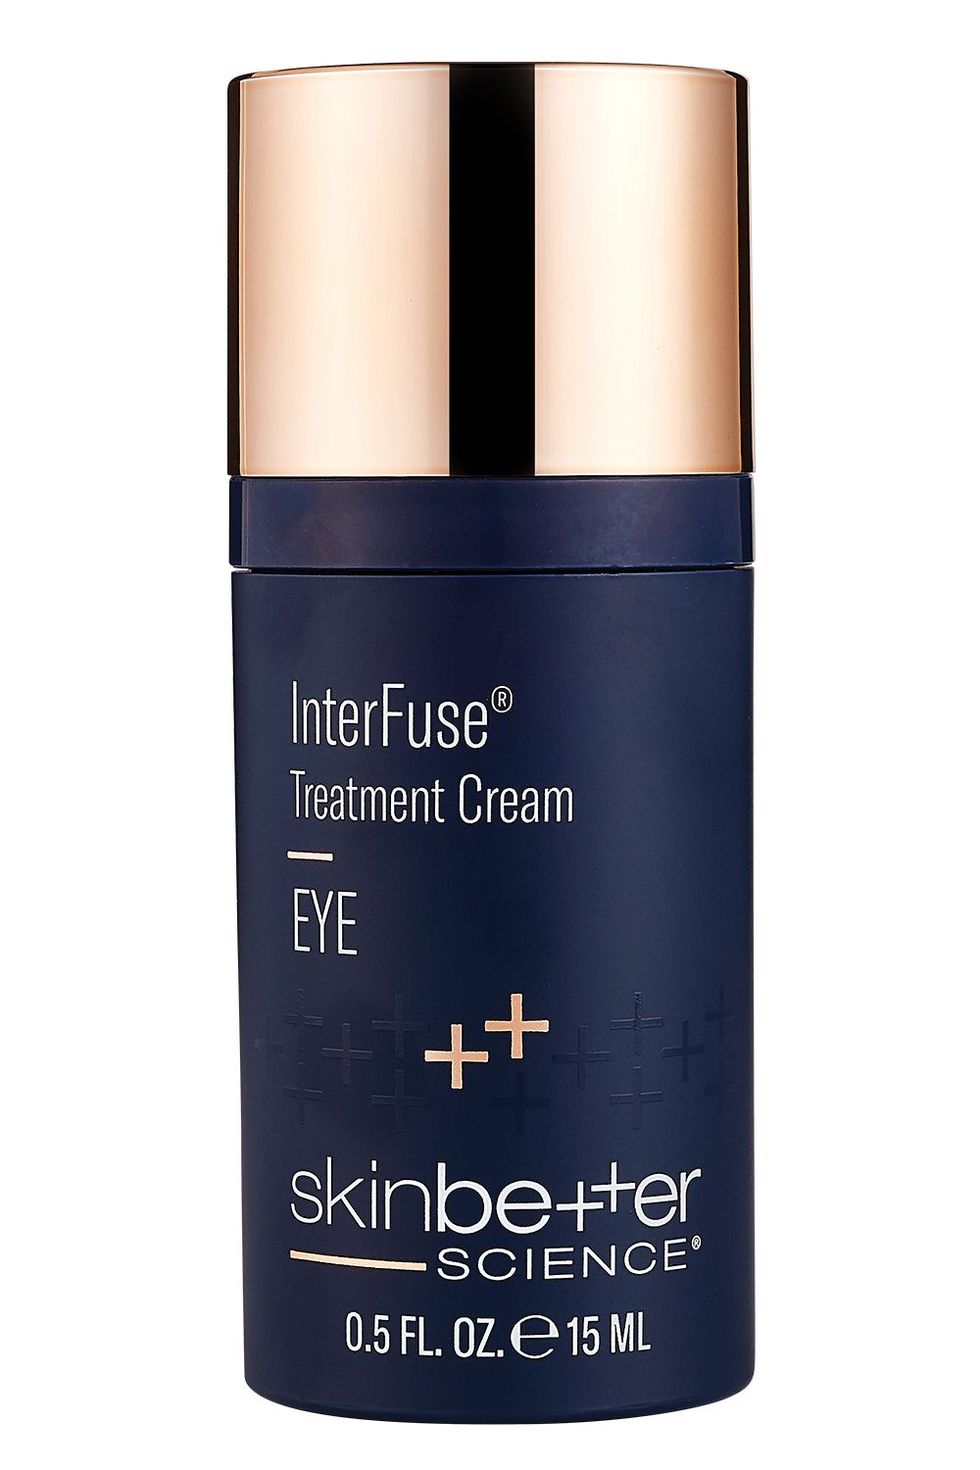 Skinbetter Science InterFuse Treatment Eye Cream